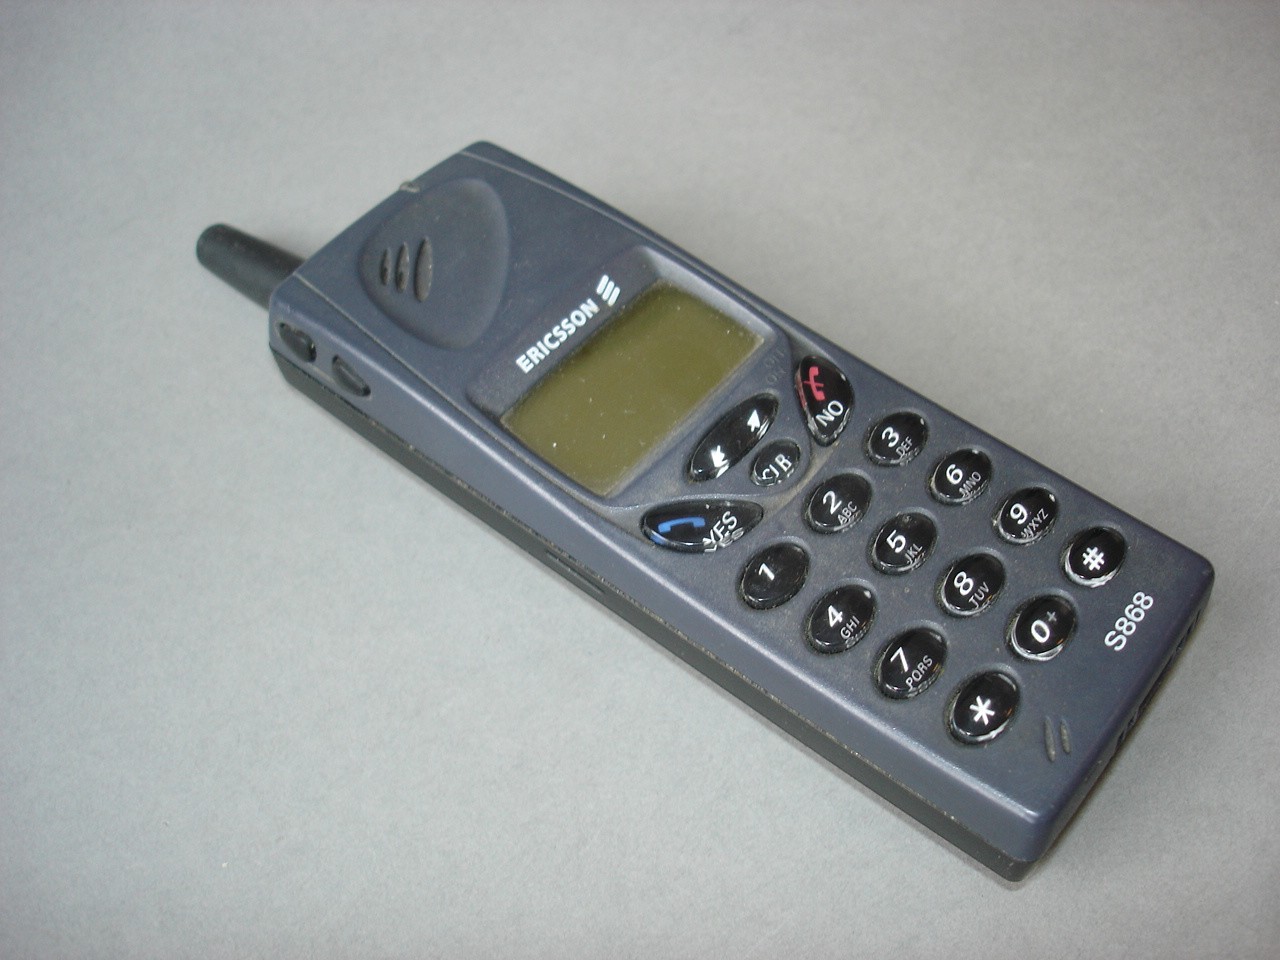 Ericsson GA868 mobiltelefon (Postamúzeum CC BY-NC-SA)